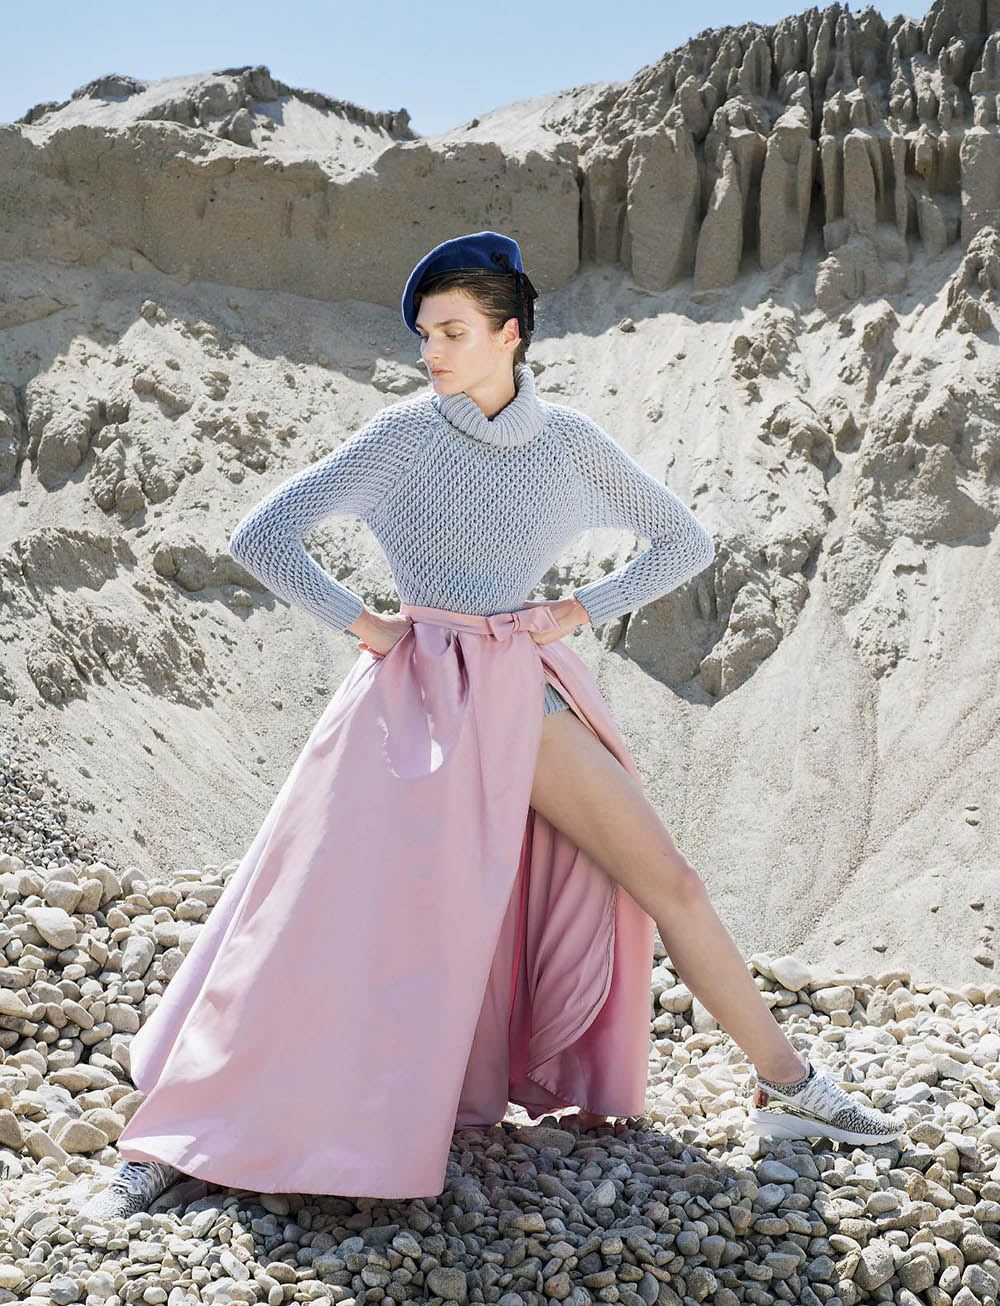 Nastya Abramova by Martina Giammaria for Glamour Italia August 2019